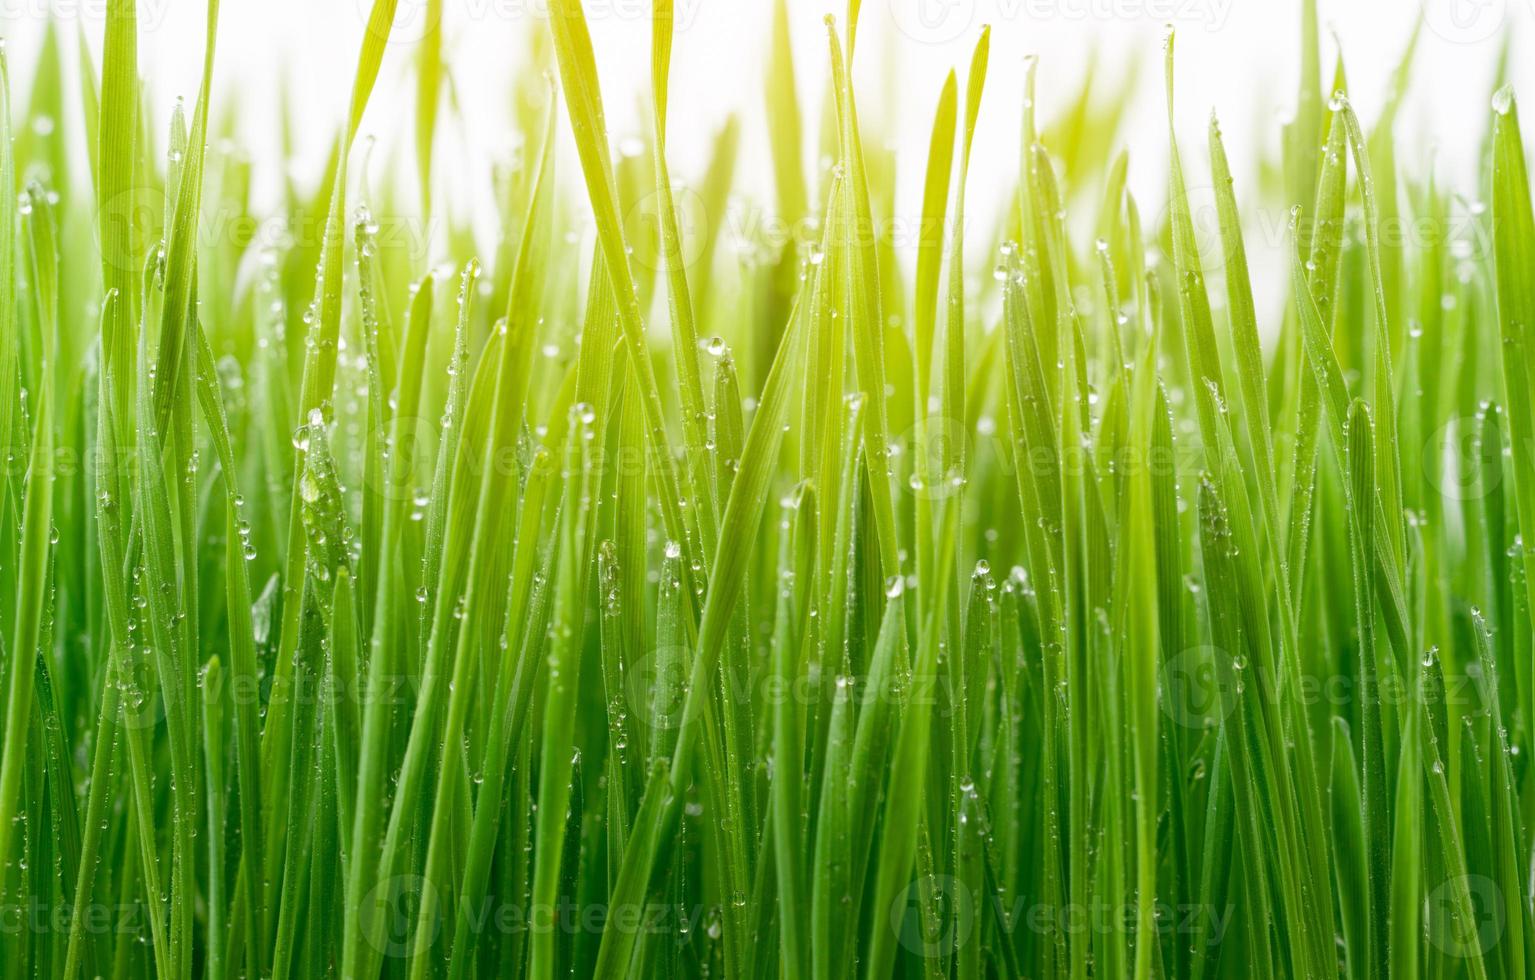 grama de trigo verde isolada no fundo branco foto